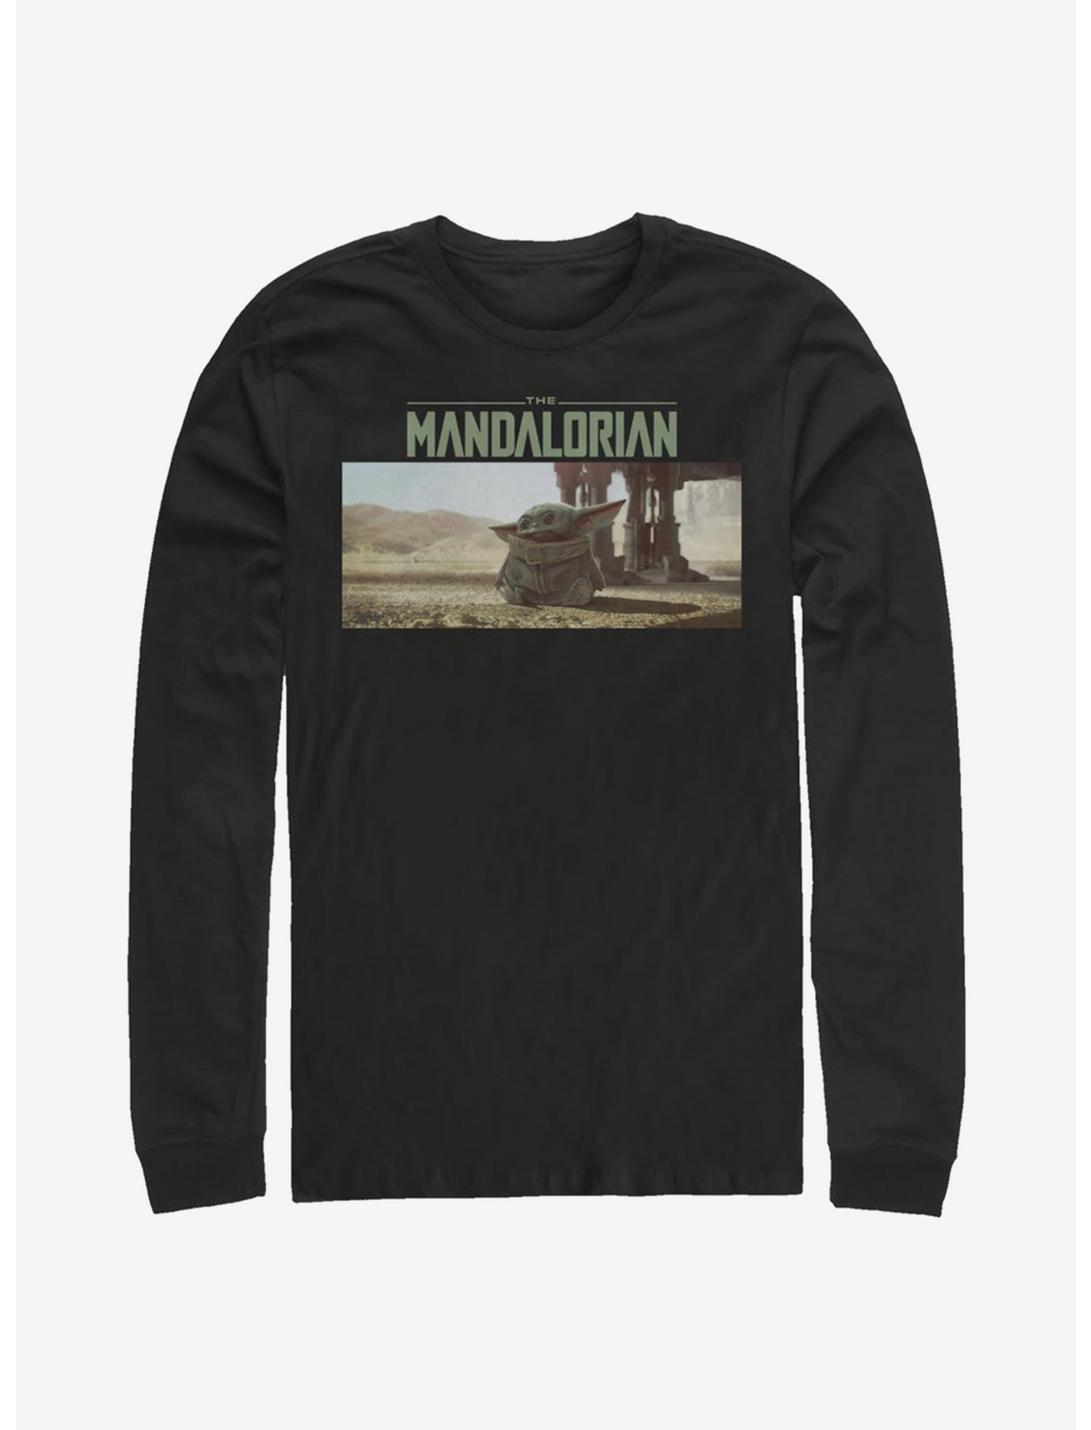 Star Wars The Mandalorian The Child Still Looking Long-Sleeve T-Shirt, BLACK, hi-res